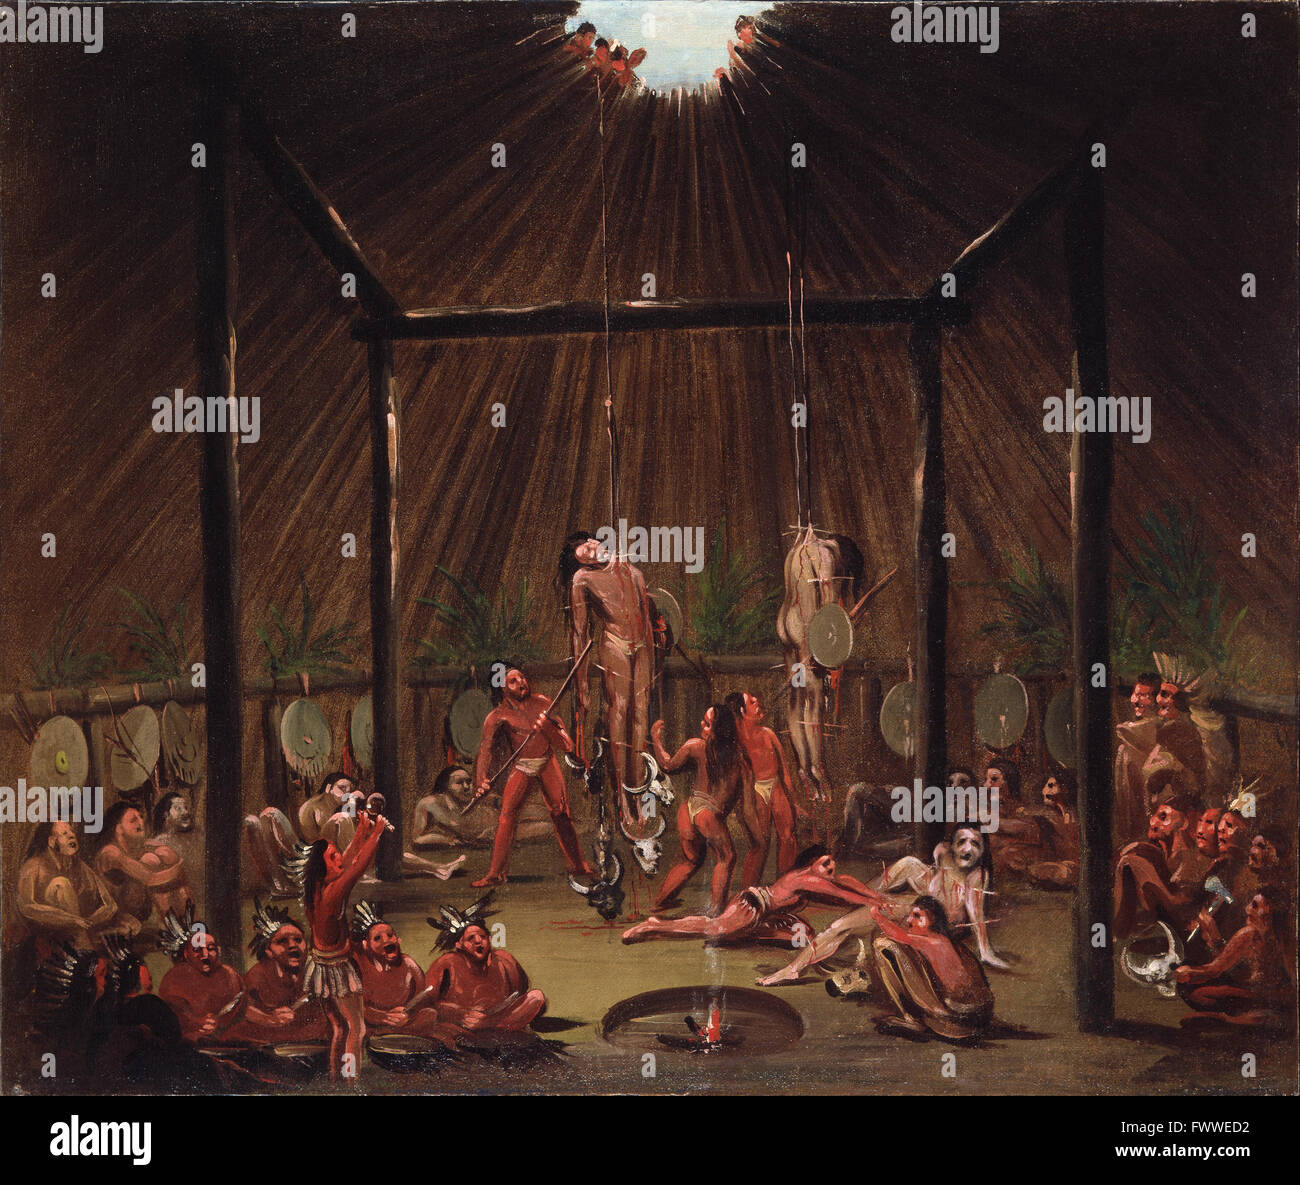 George Catlin - The Cutting Scene, Mandan O-kee-pa Ceremony - Denver Art Museum Stock Photo